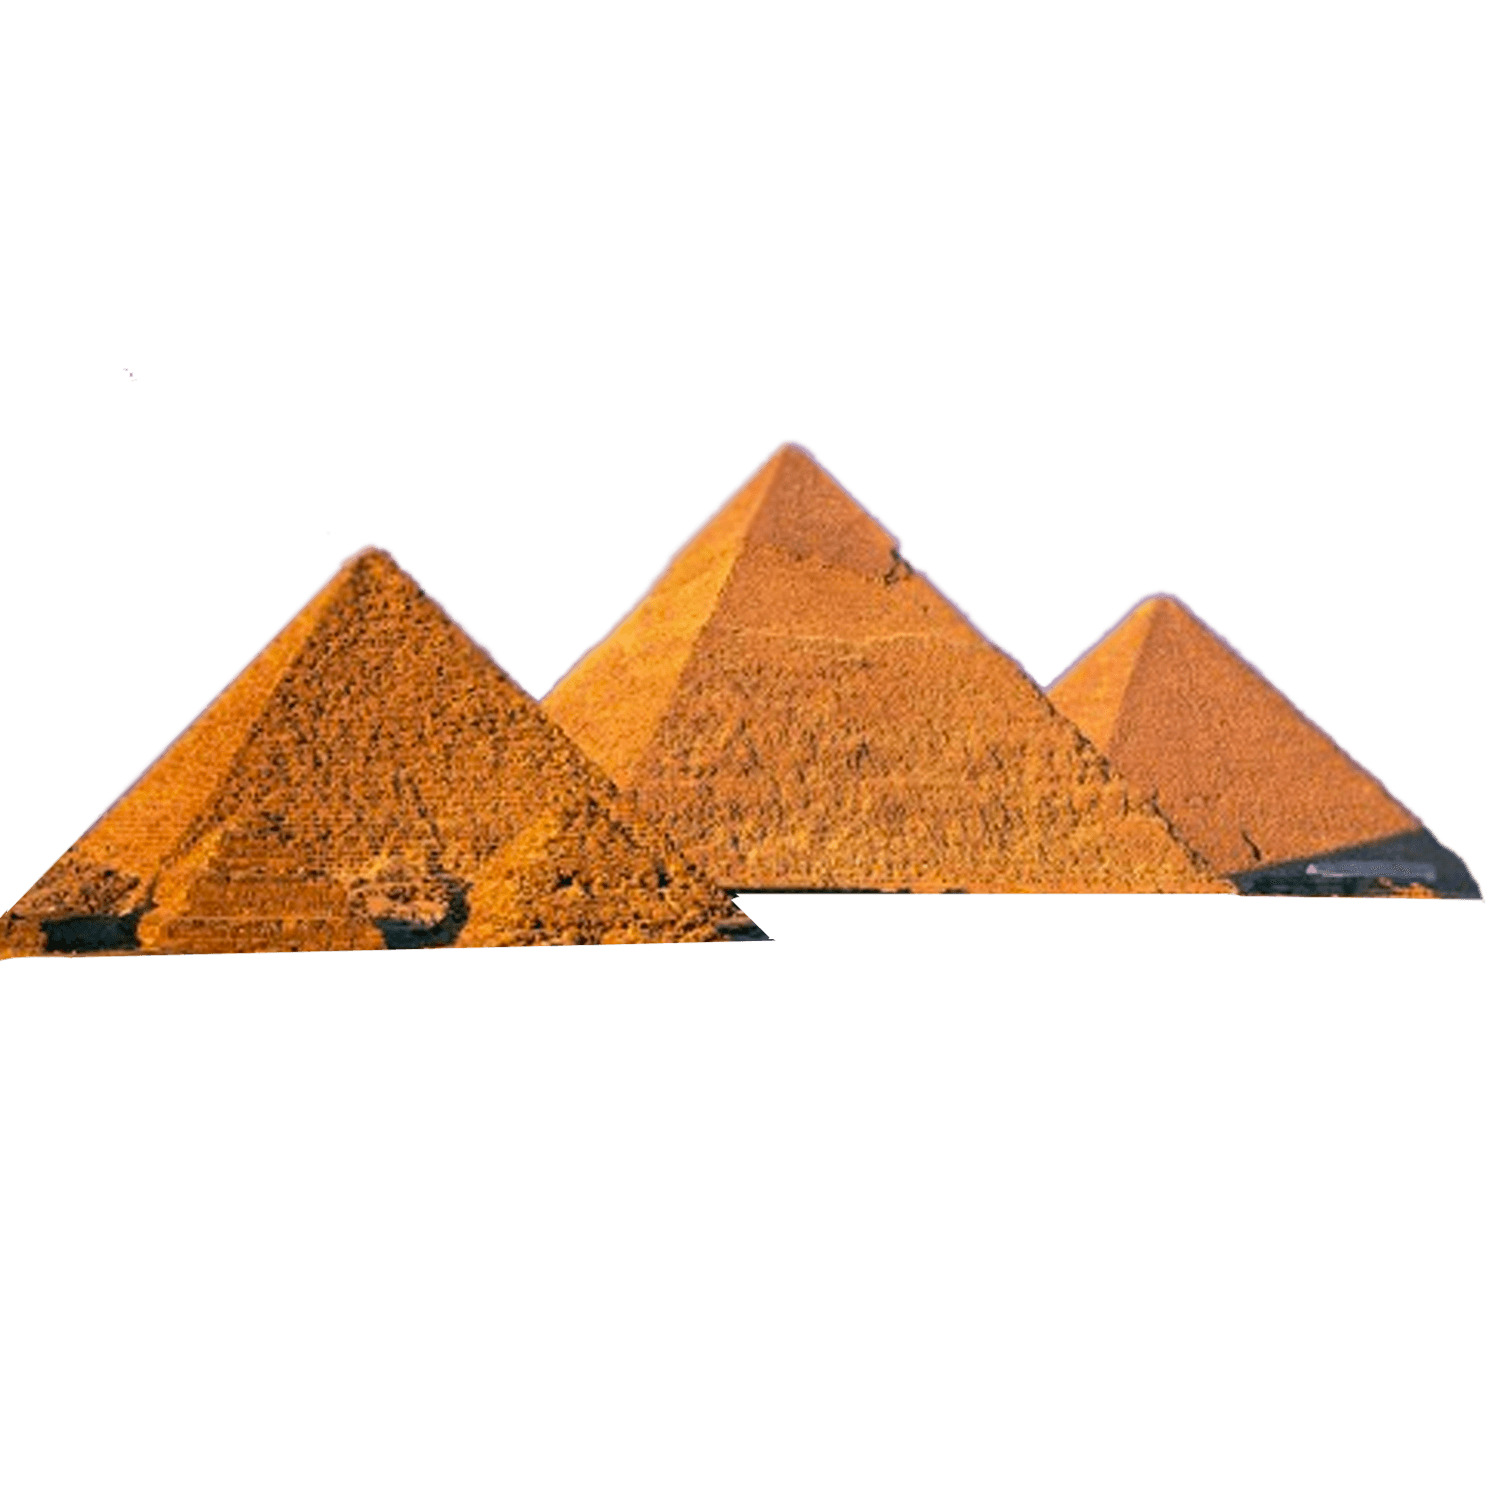 Pyramids 3 Egypt icons